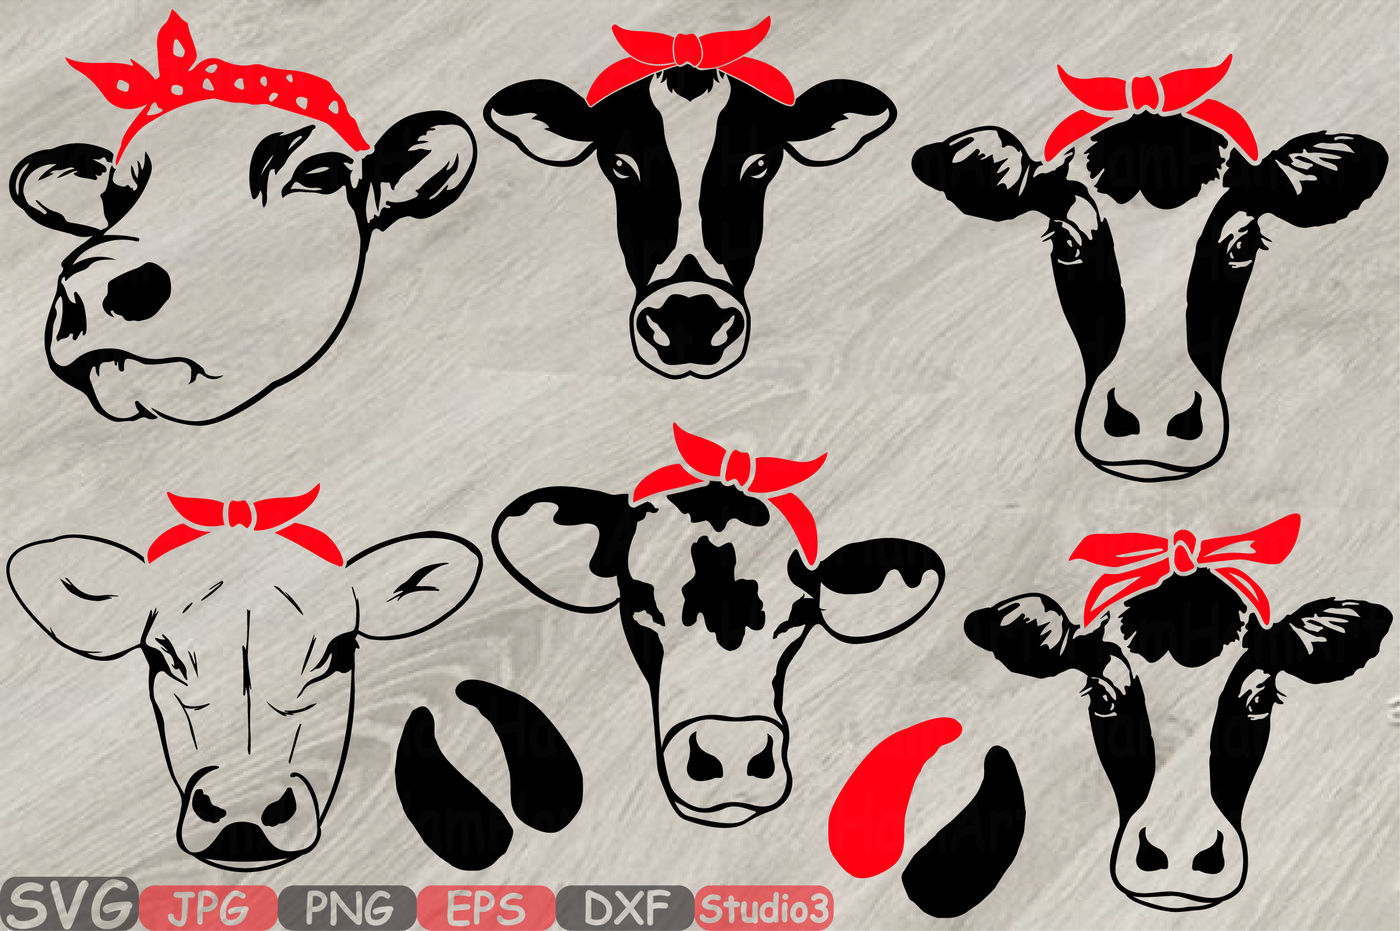 Download Cow Head whit Bandana Silhouette SVG cowboy cattle Farm ...